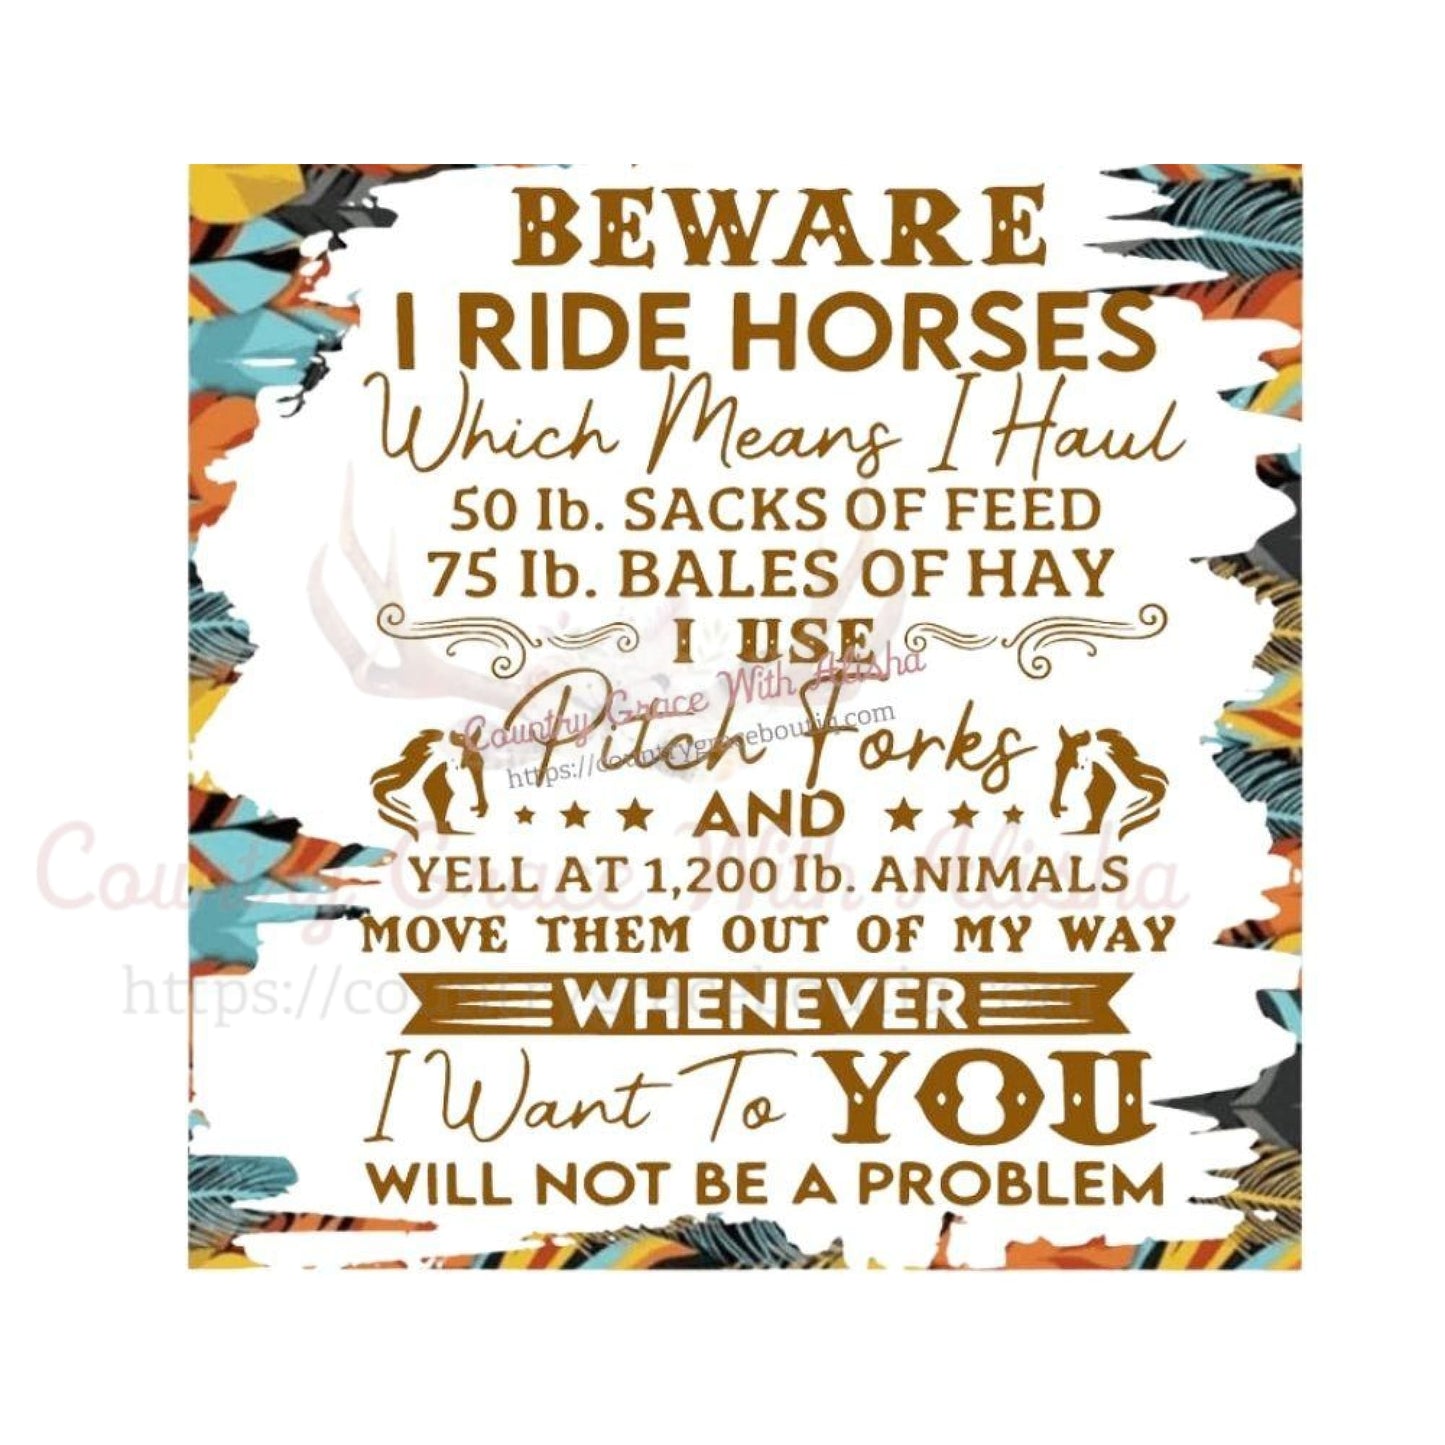 Beware I Ride Horses Sublimation Transfer - Sub $1.50 